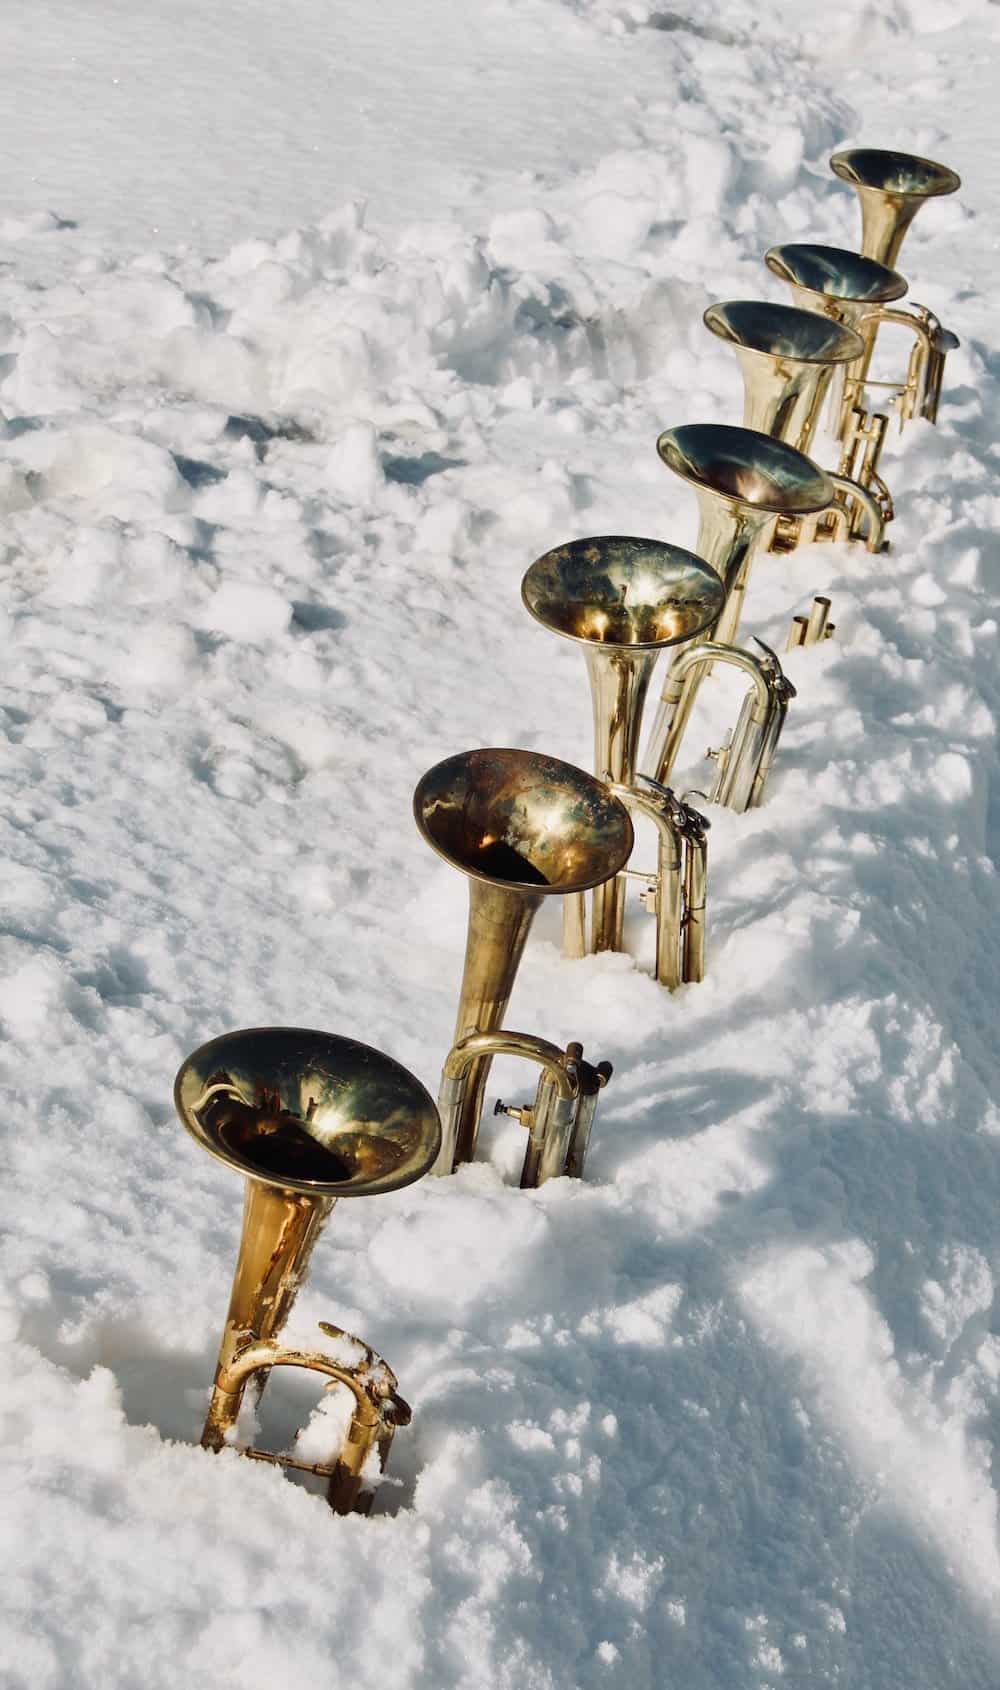 Trumpet Bells in a Snowbank